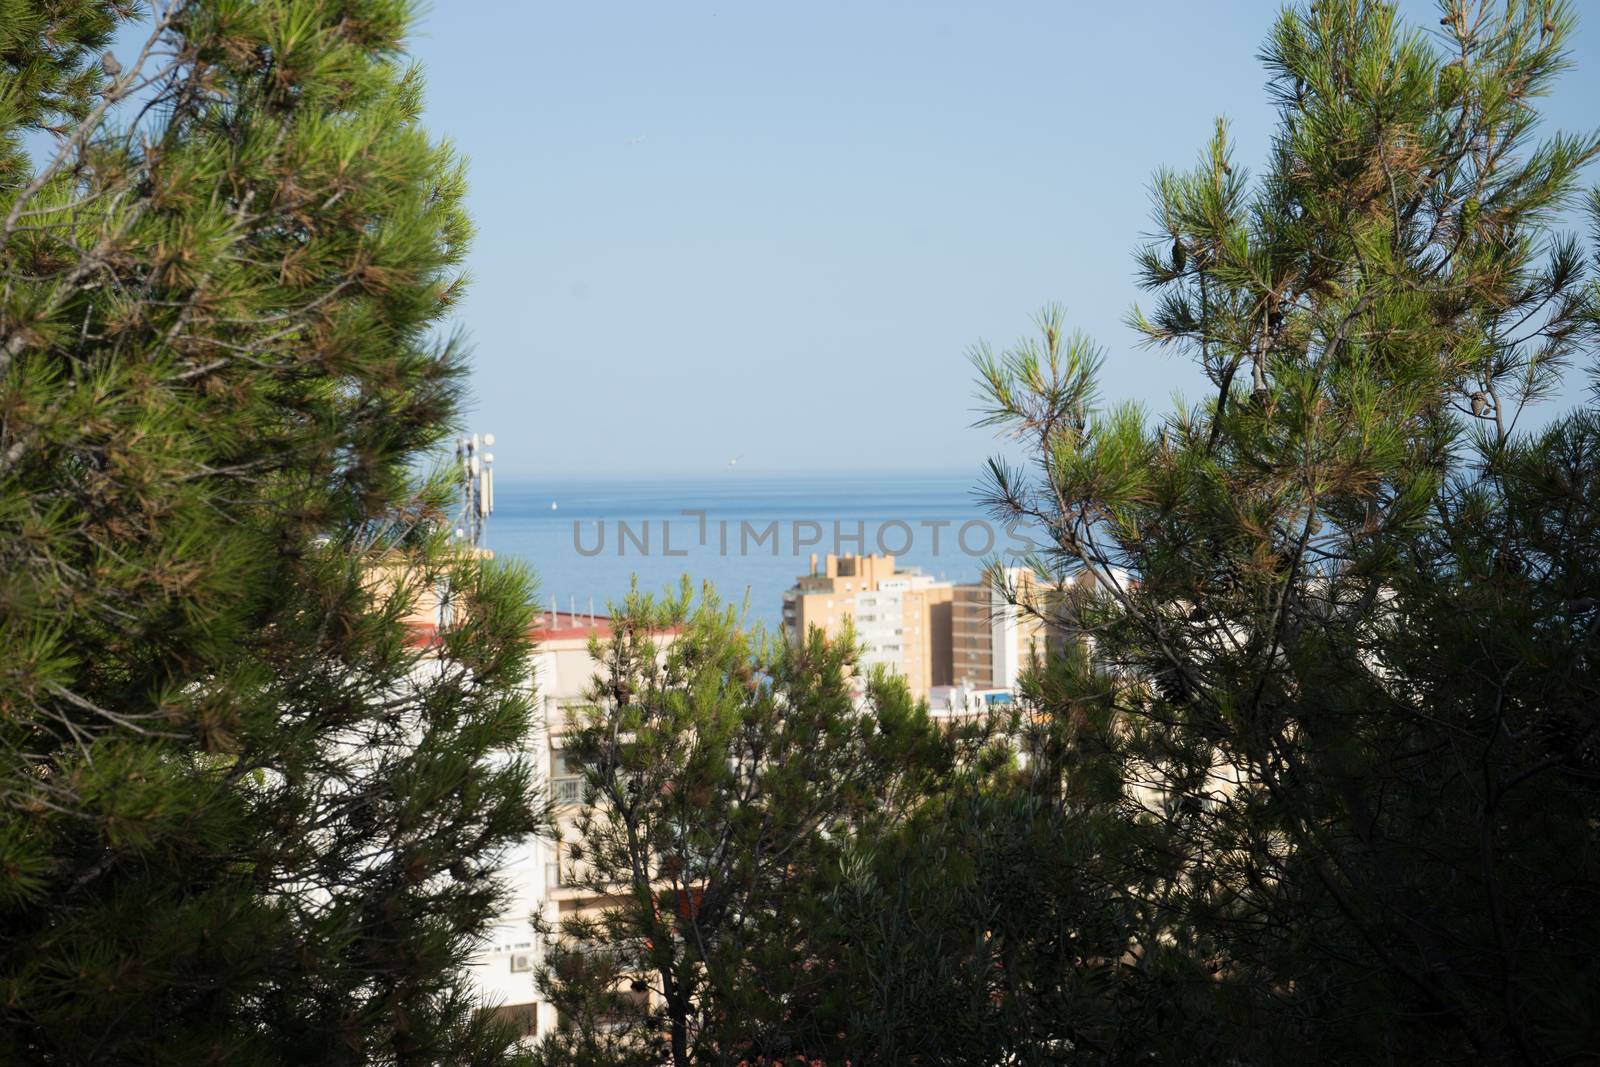 City skyline of Malaga overlooking the sea ocean in Malaga, Spai by ramana16